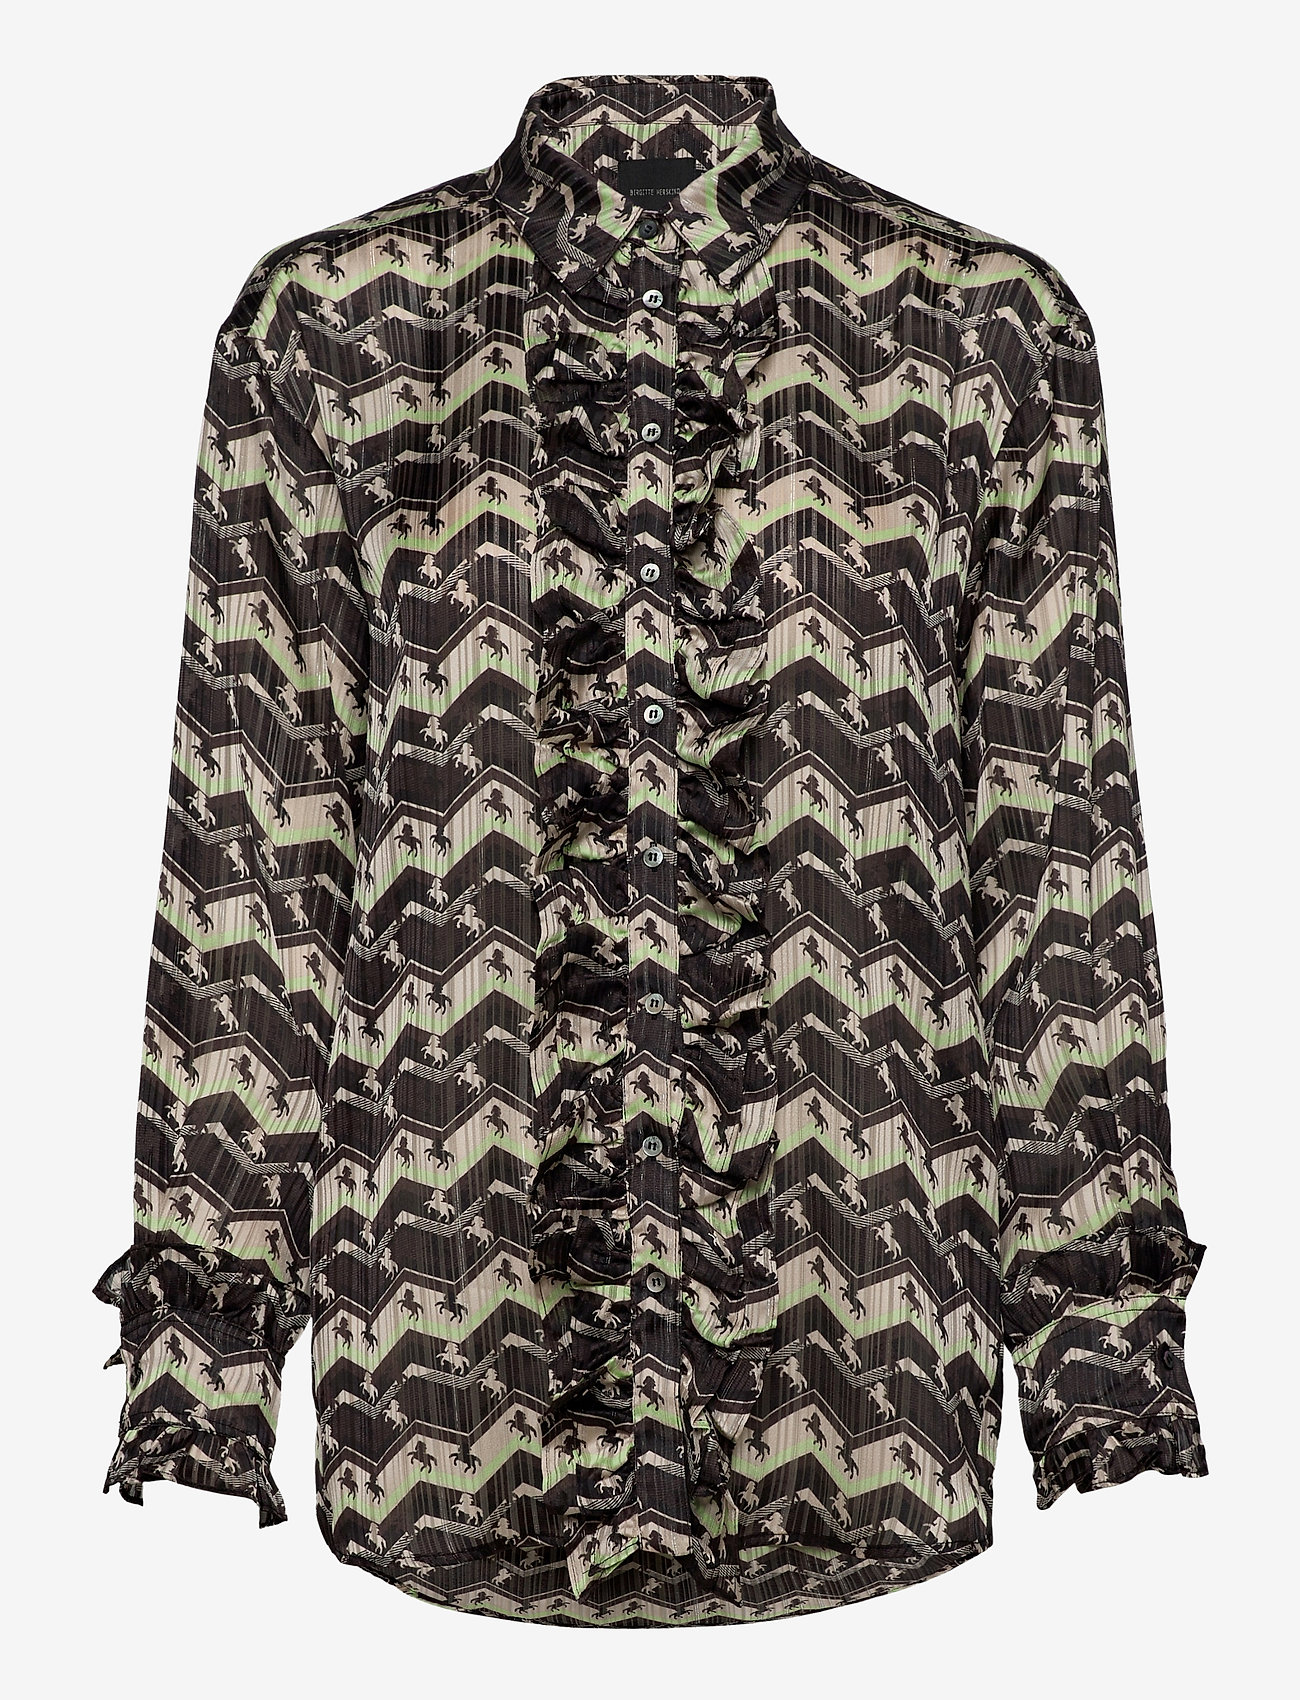 Birgitte Herskind - Marlin Shirt - bluzki z długimi rękawami - horse print - 0